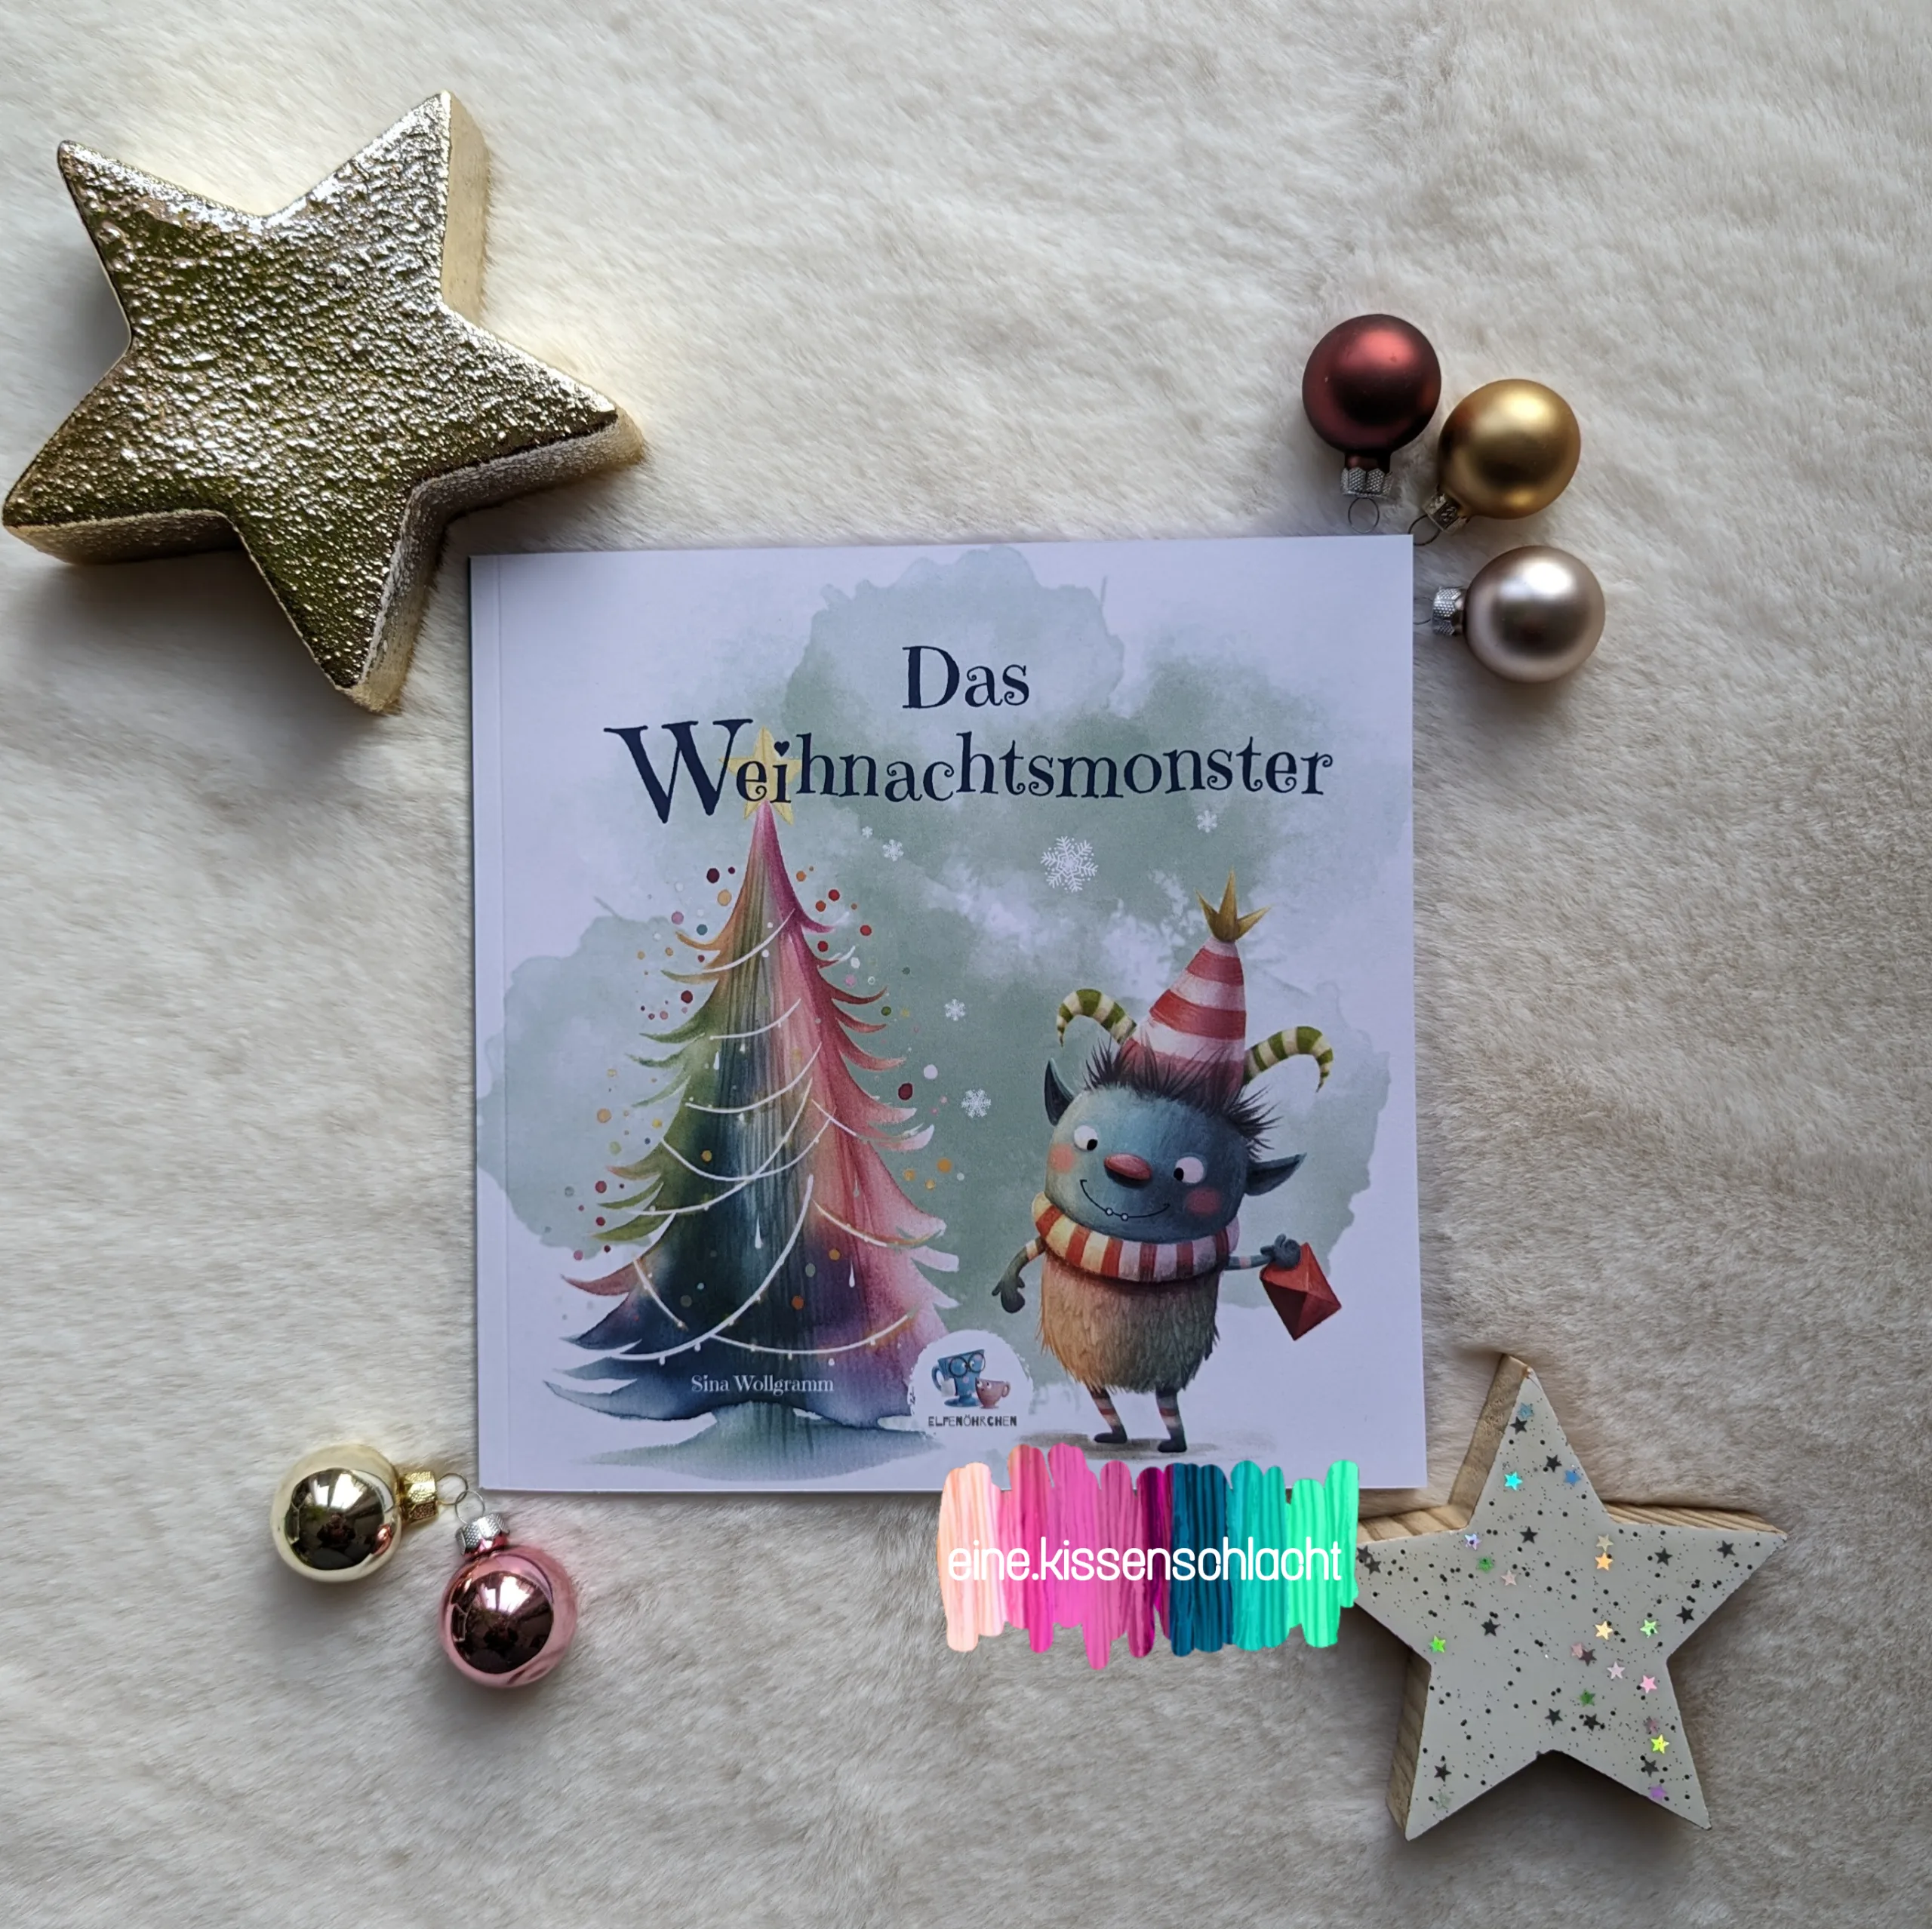 You are currently viewing Das Weihnachtsmonster (Sina Wollgramm)